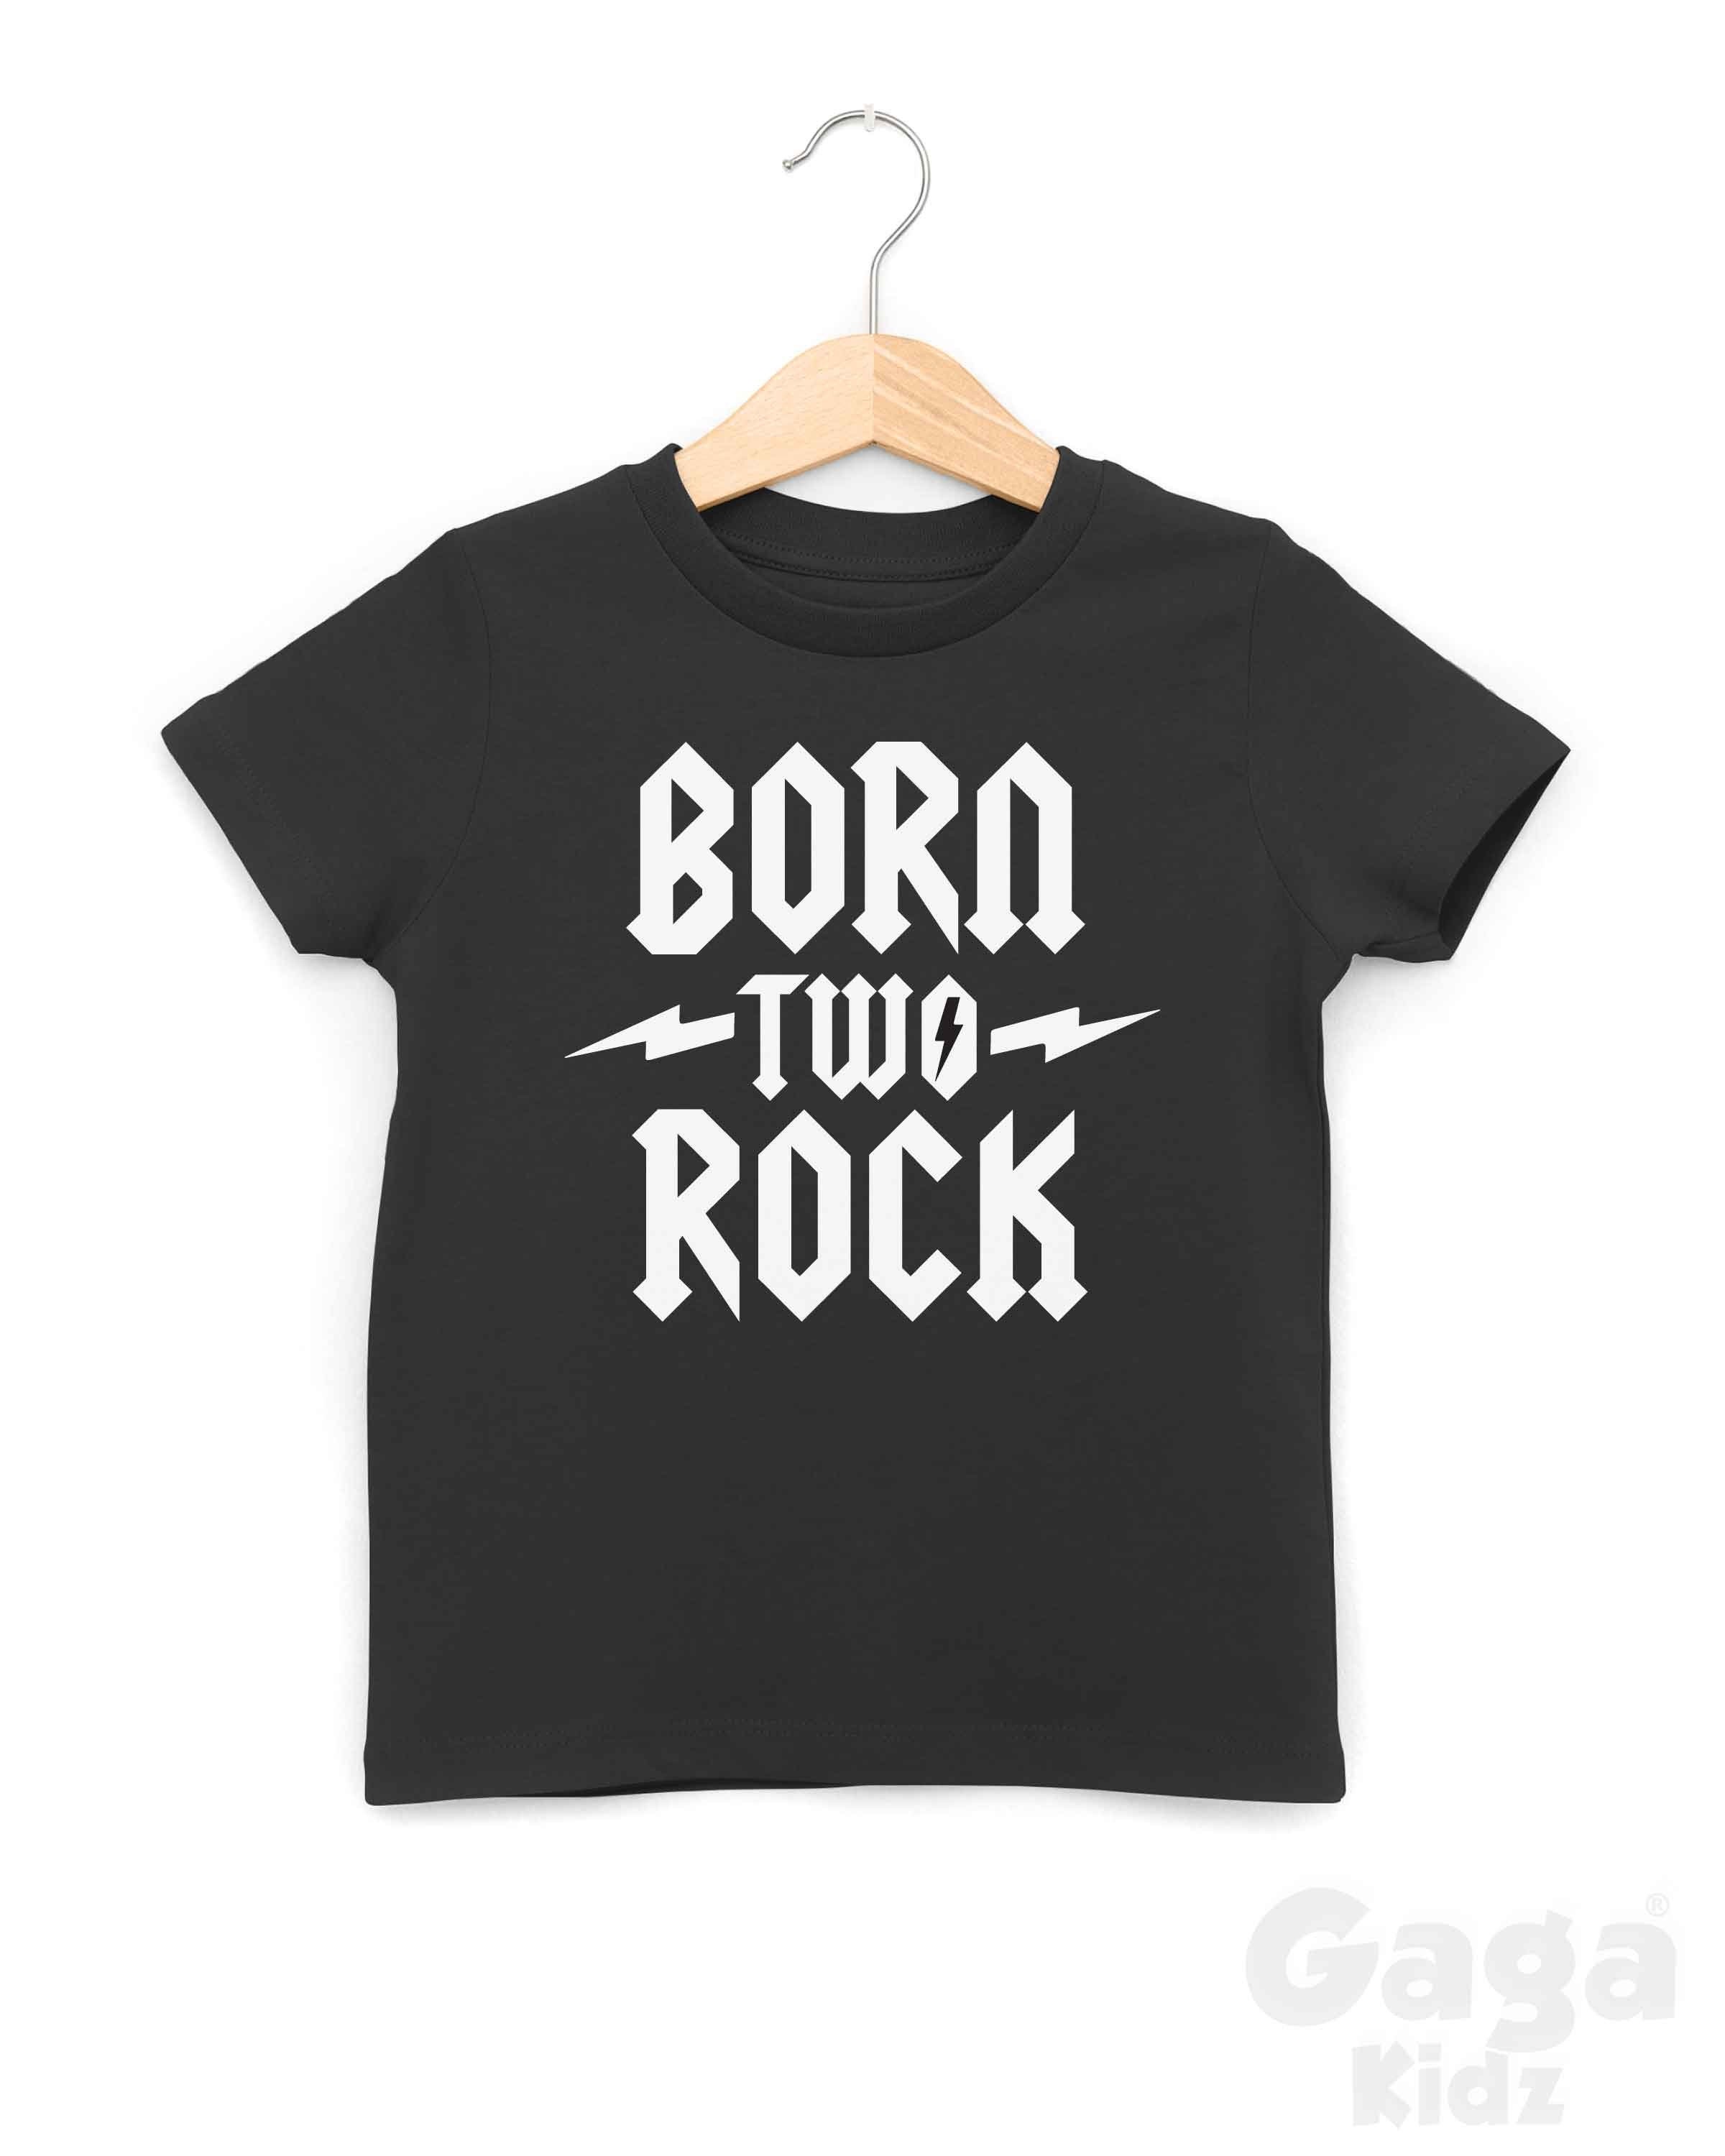 Born Two Roll Rock Toddler Rock Metal T-shirt, N Kids - Etsy Heavy